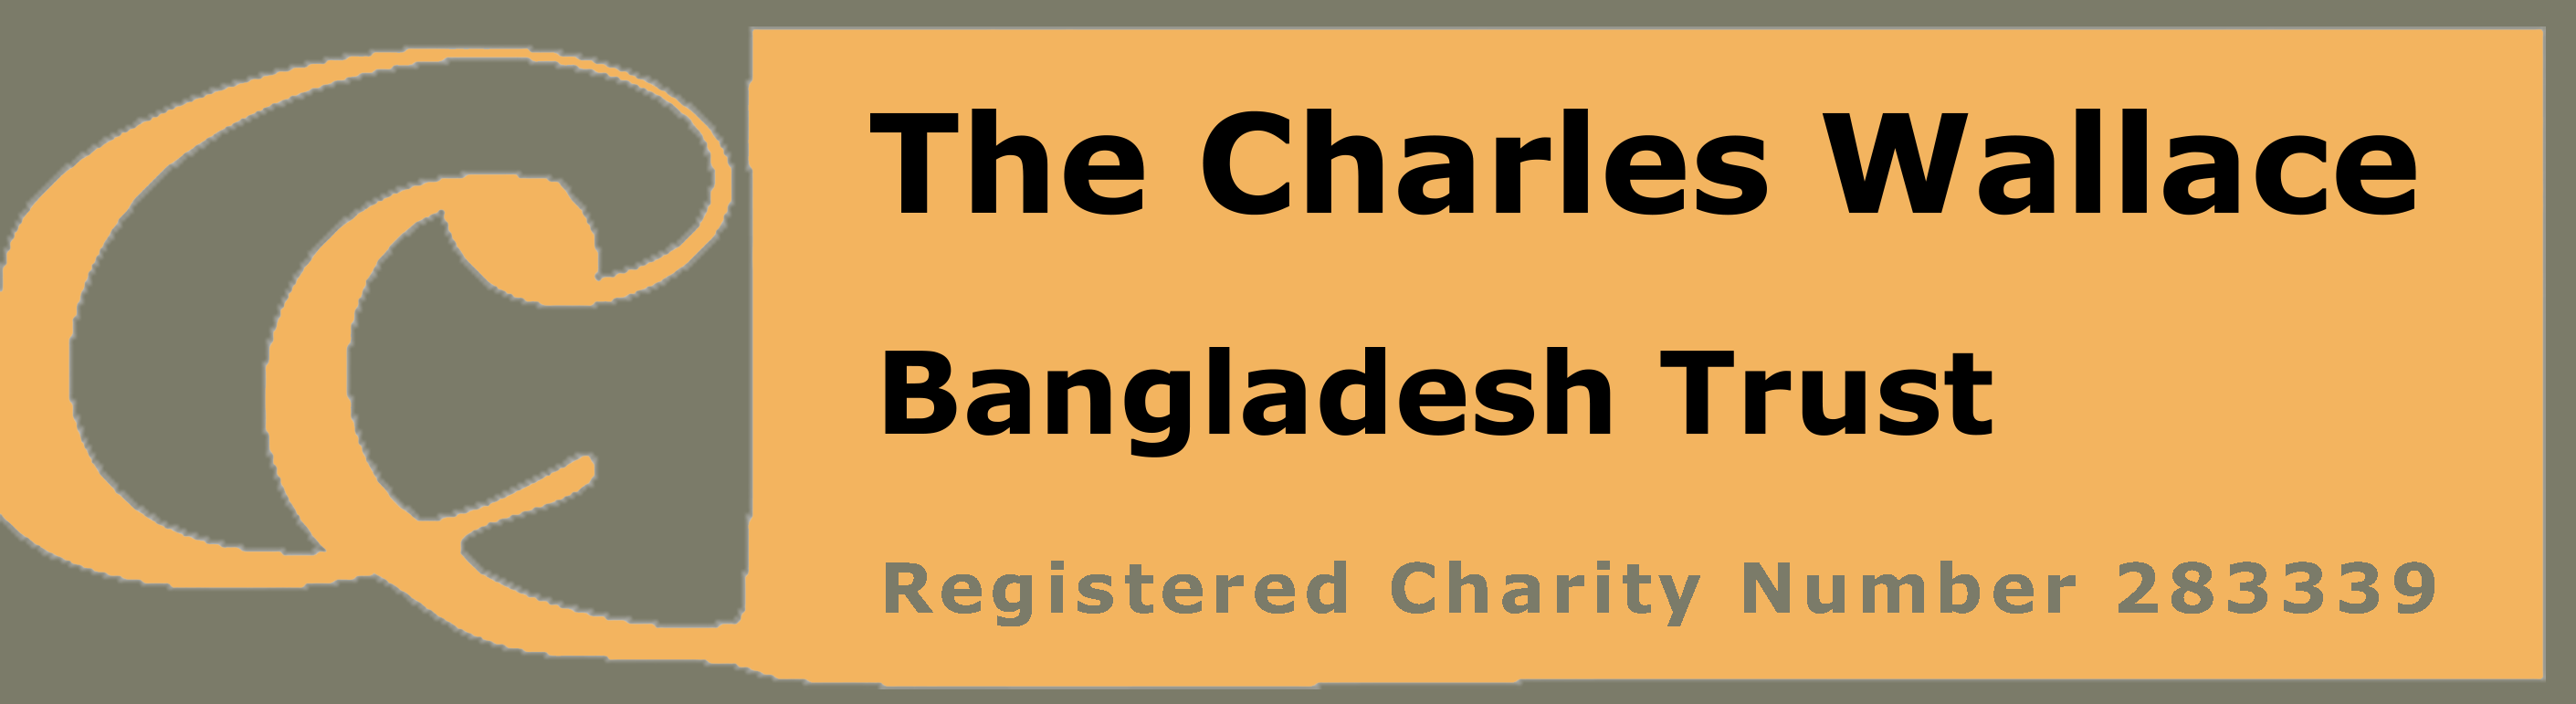 CWTLOGO_bangladesh_new